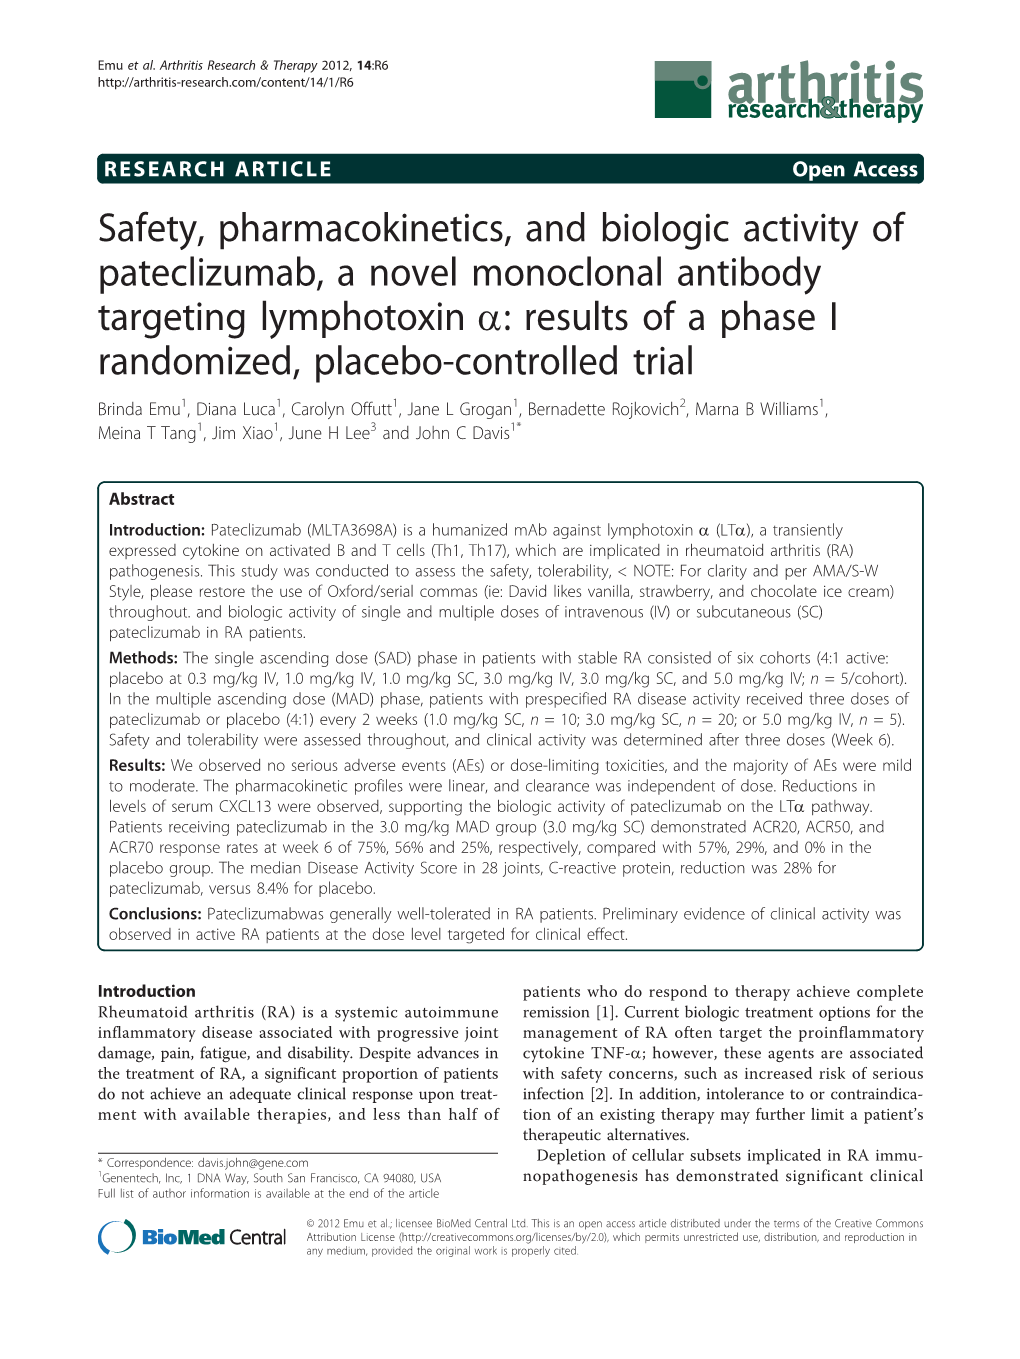 Safety, Pharmacokinetics, and Biologic Activity of Pateclizumab, a Novel